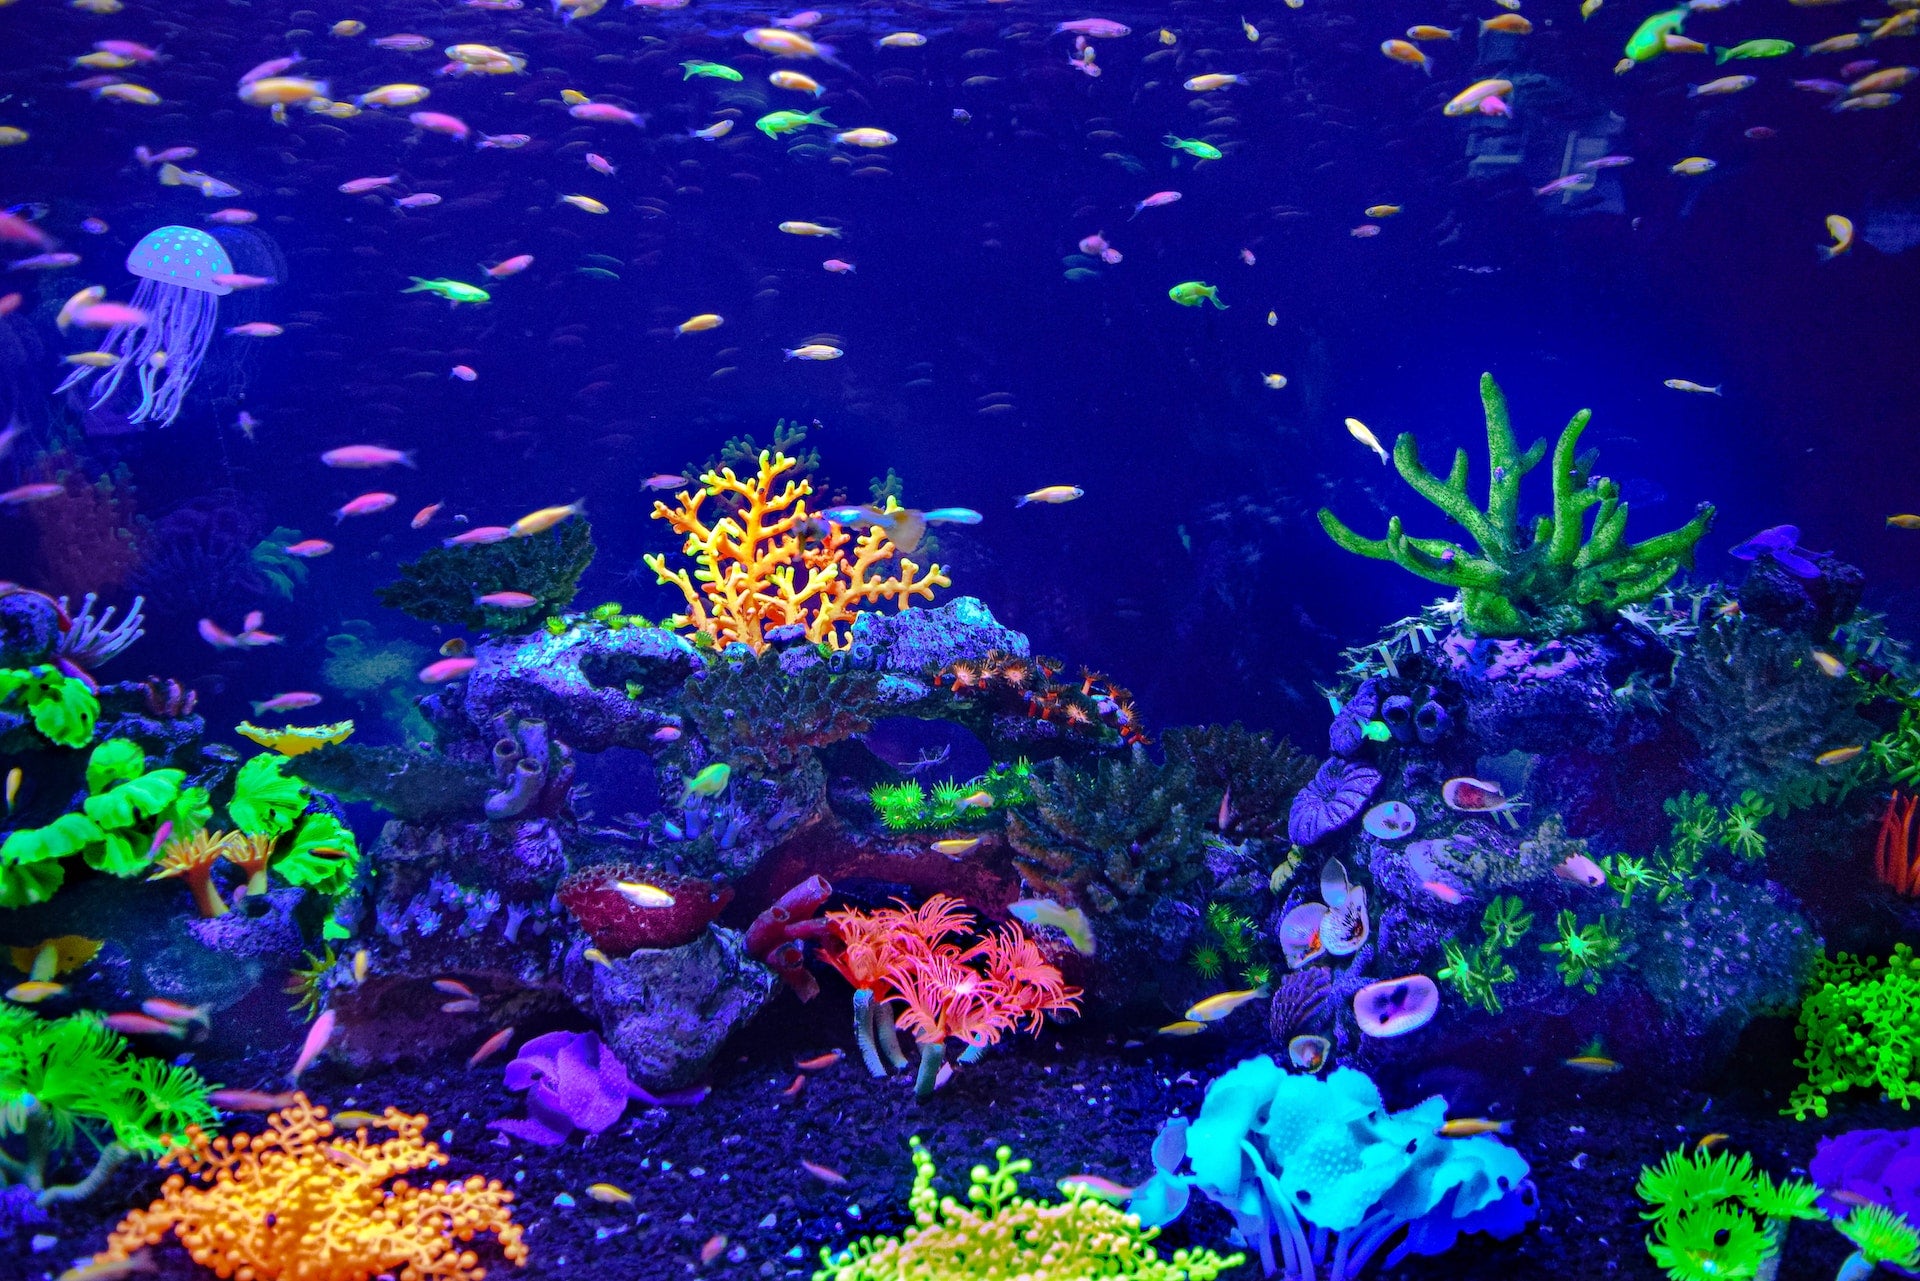 Aquarium Plant Care 101: Essential Tips for Growing Healthy, Thriving Aquatic Plants